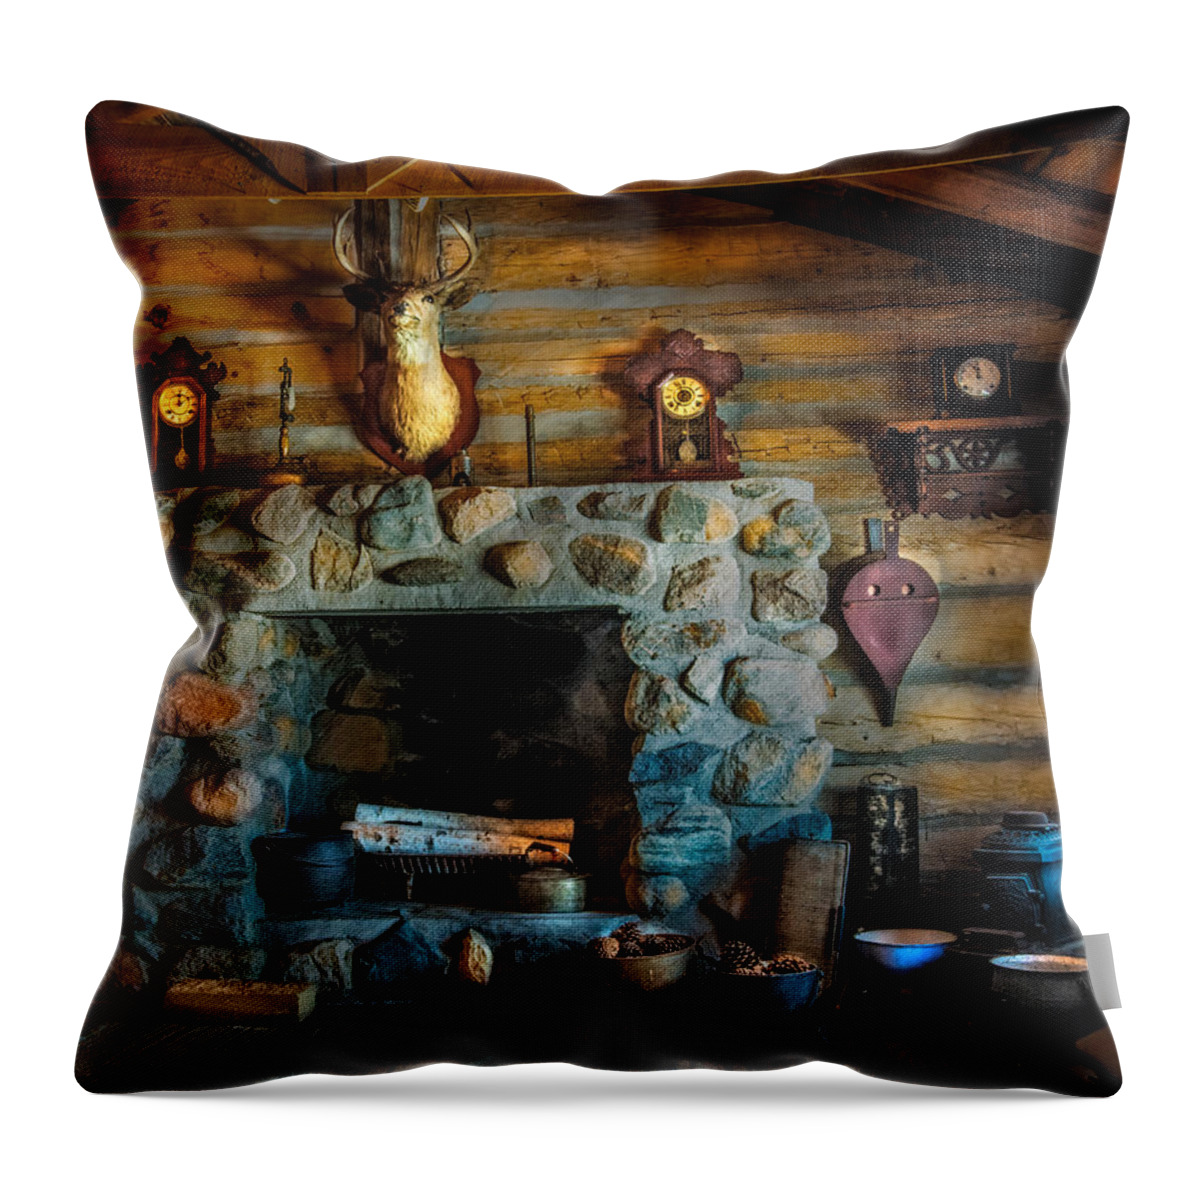 Log Cabin With Fireplace Throw Pillow featuring the photograph Log Cabin with Fireplace by Paul Freidlund